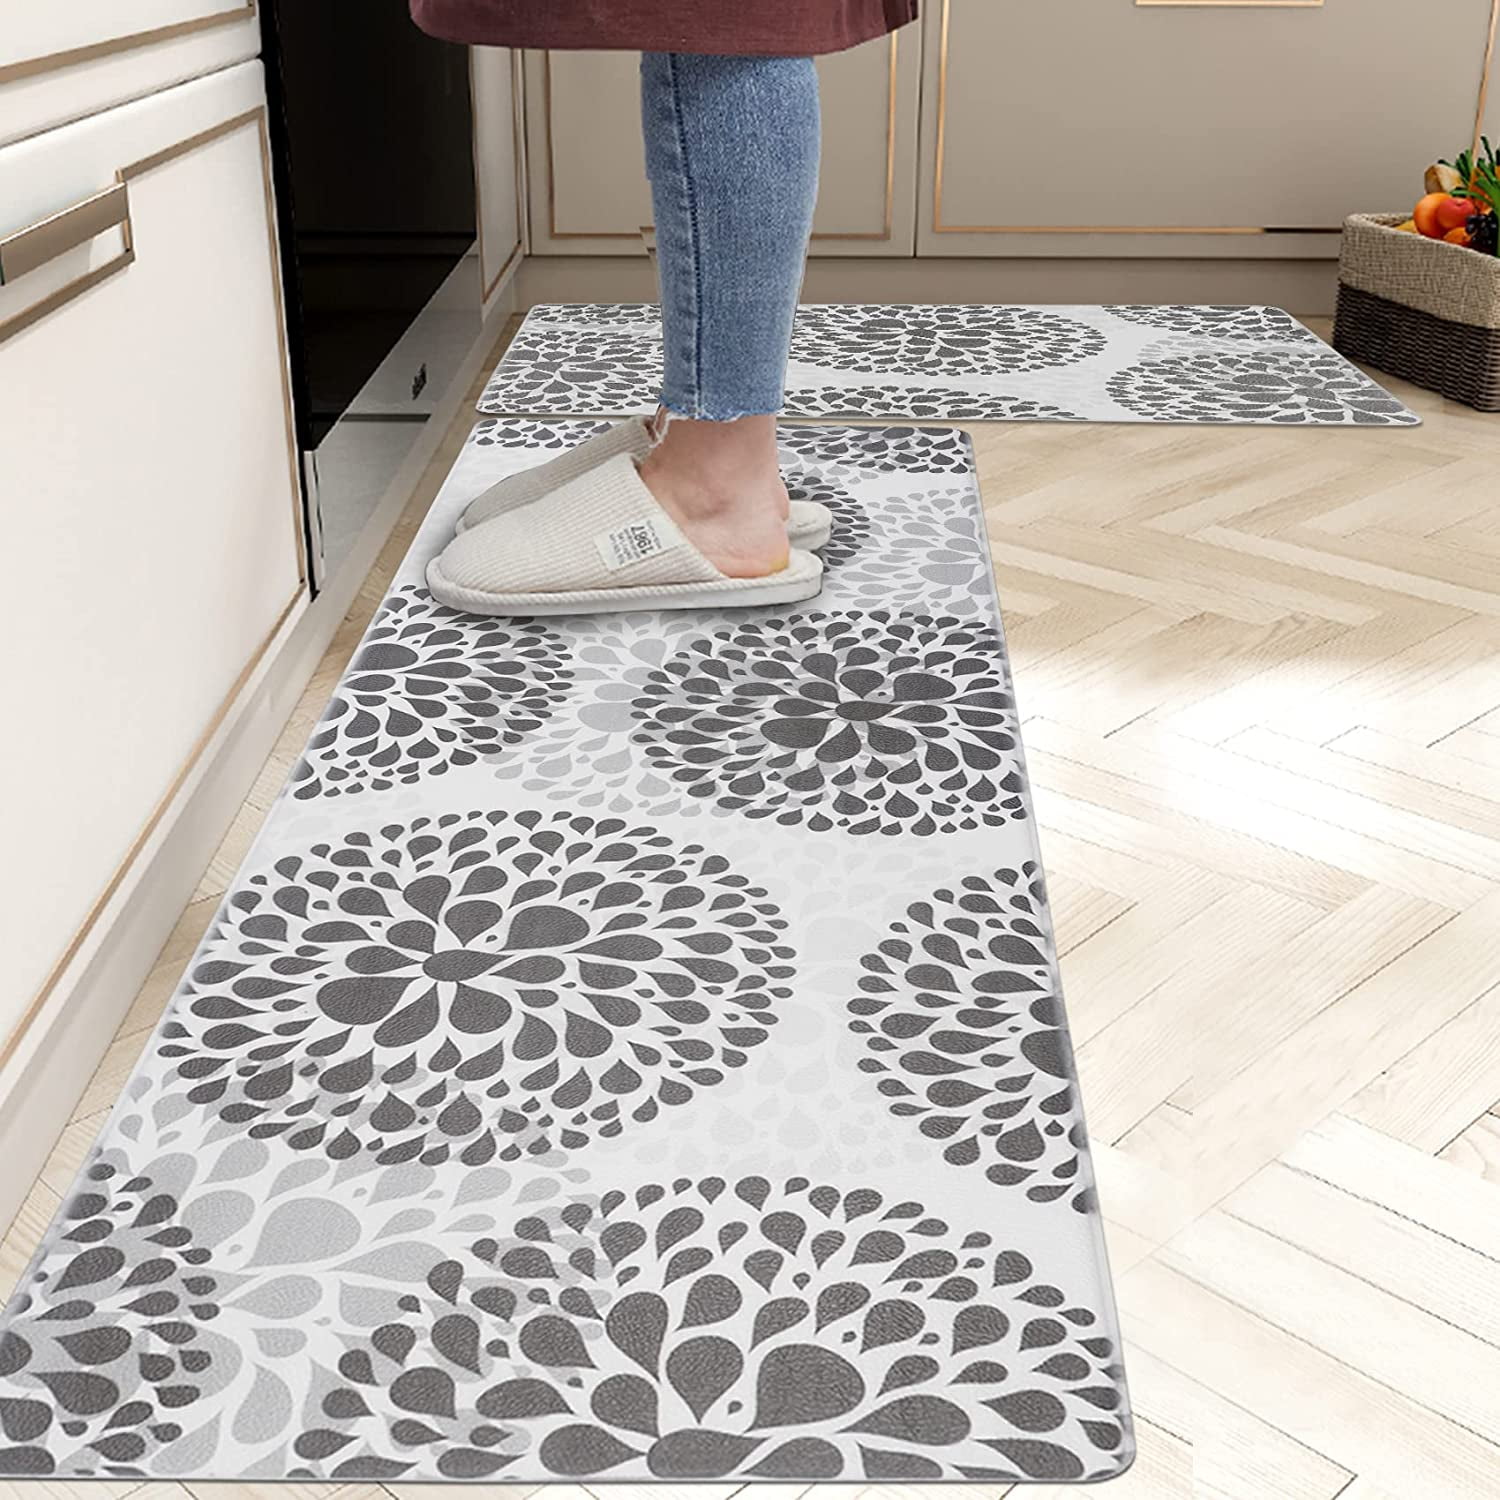 17.5 x 47inch+17.5 x 28inch;Grey Kitchen Mats Home Office 2 PCS Rug Set Non-slip Anti-Fatigue Waterproof Oil-proof Floor Mat Comfort Standing for Kitchen